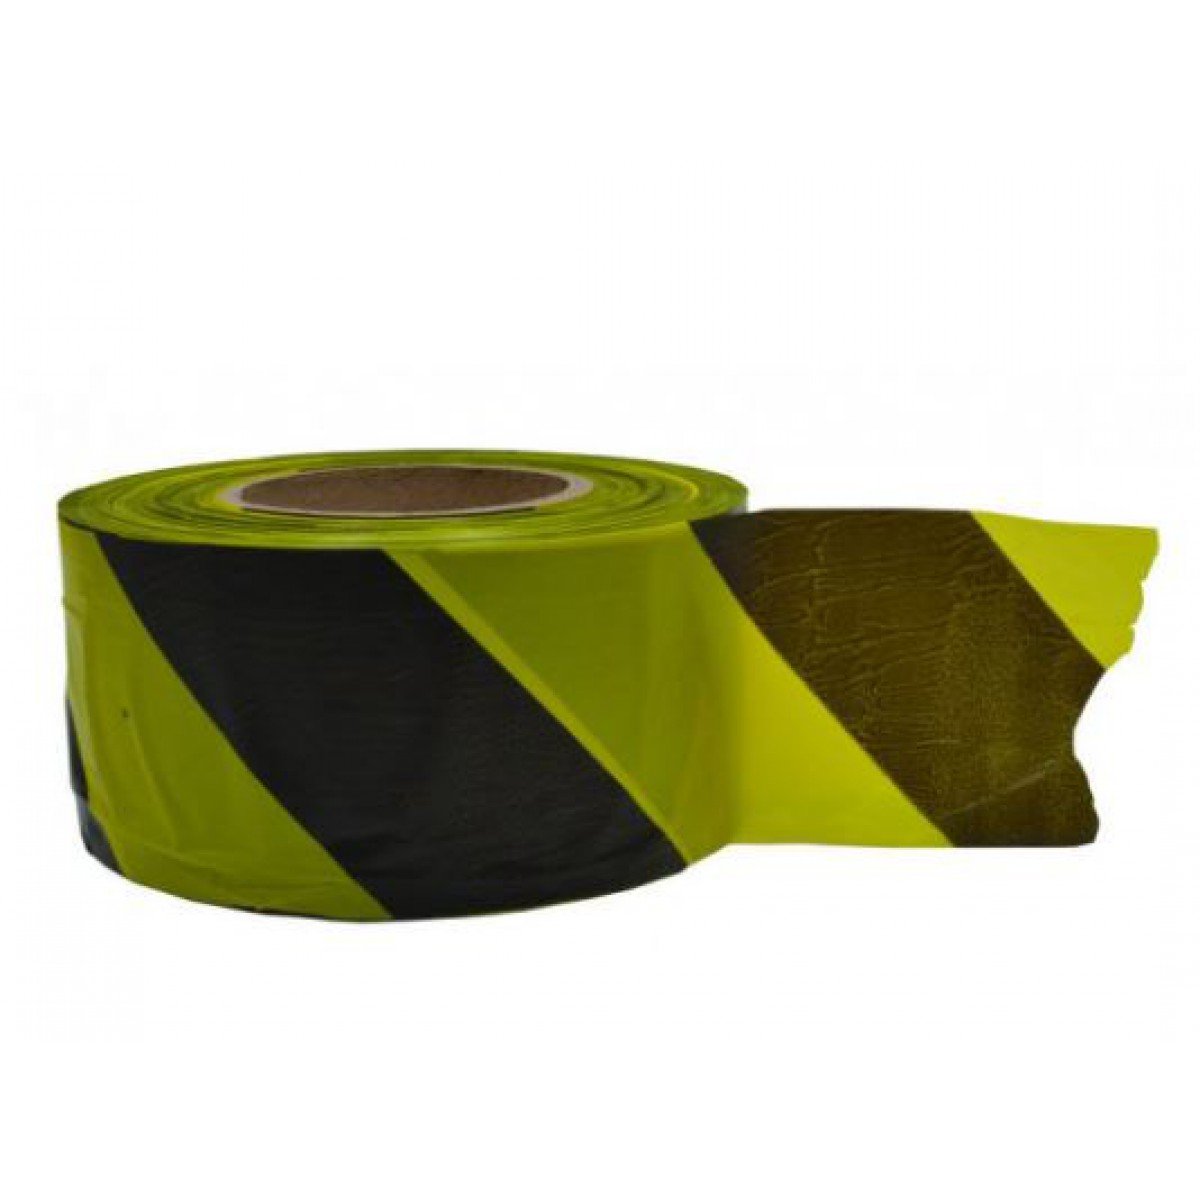 Black/yellow non adhesive tape